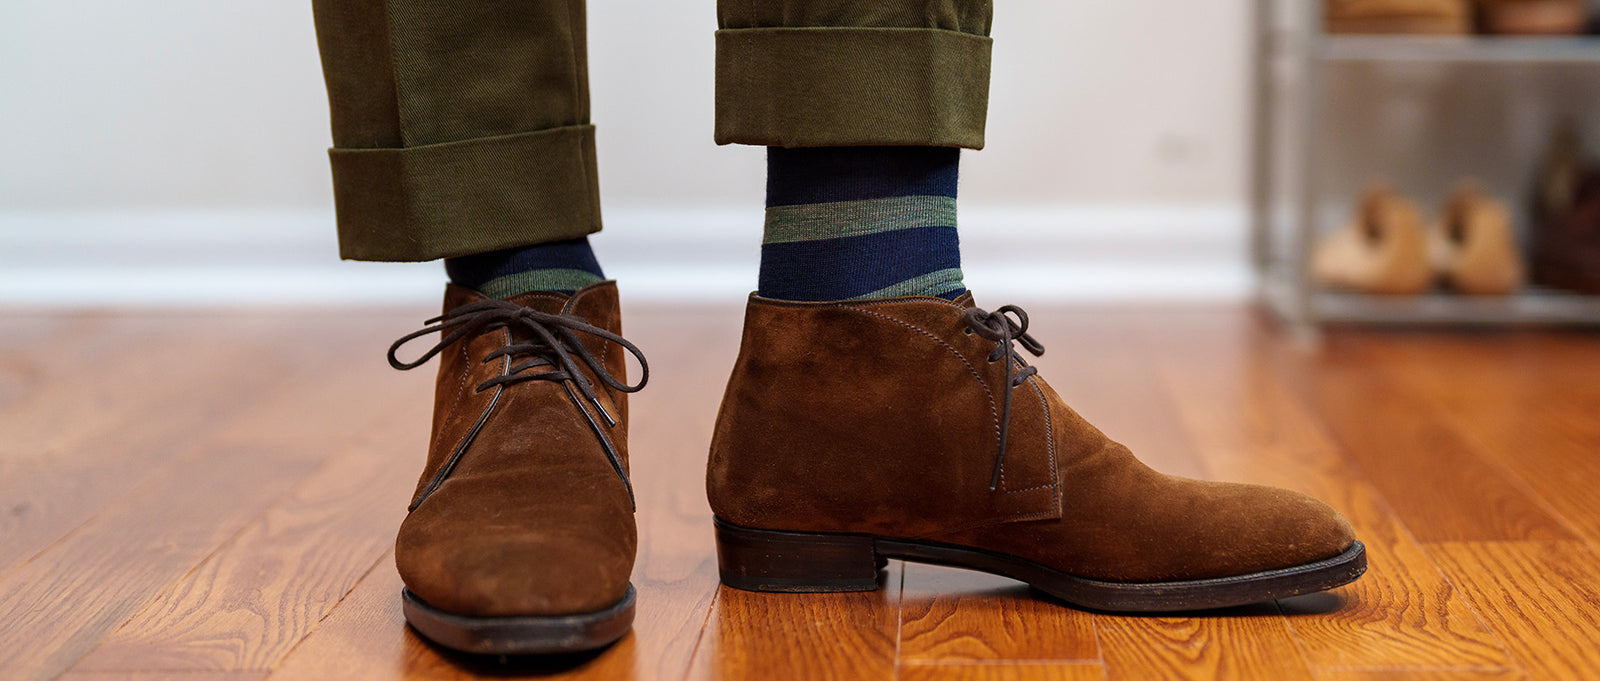 Dress Sock Length: Mid-Calf or Over the Calf? - Boardroom Socks